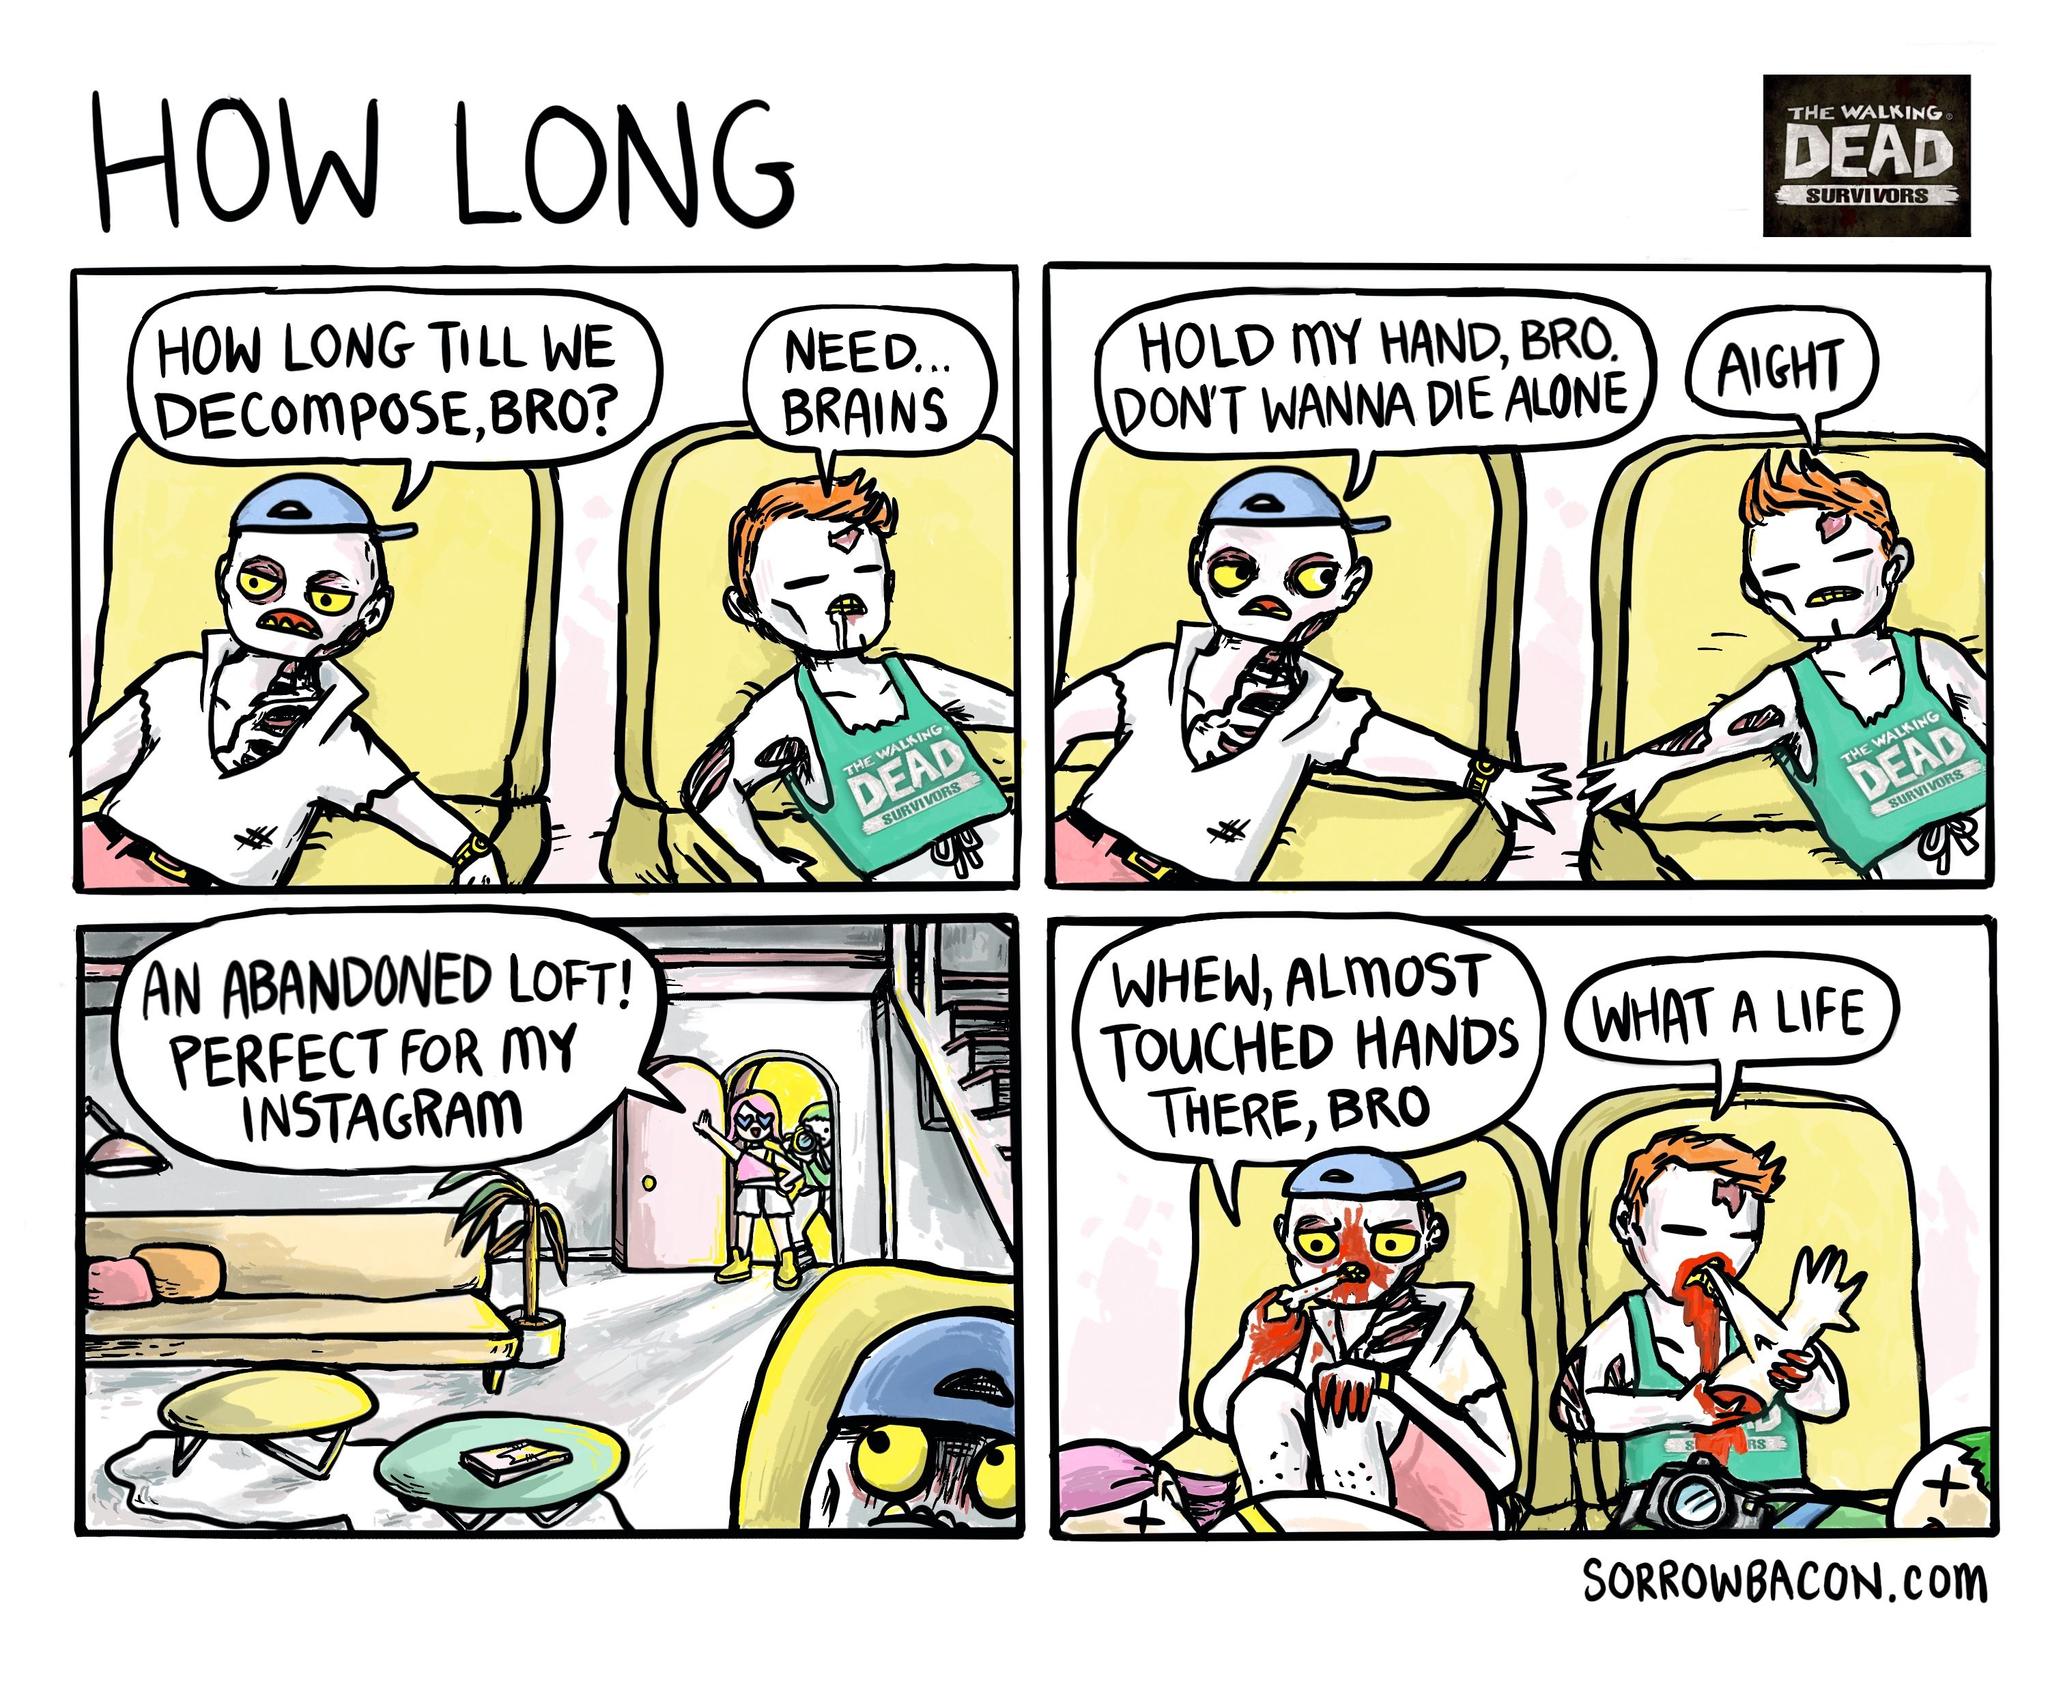 How Long sorrowbacon comic